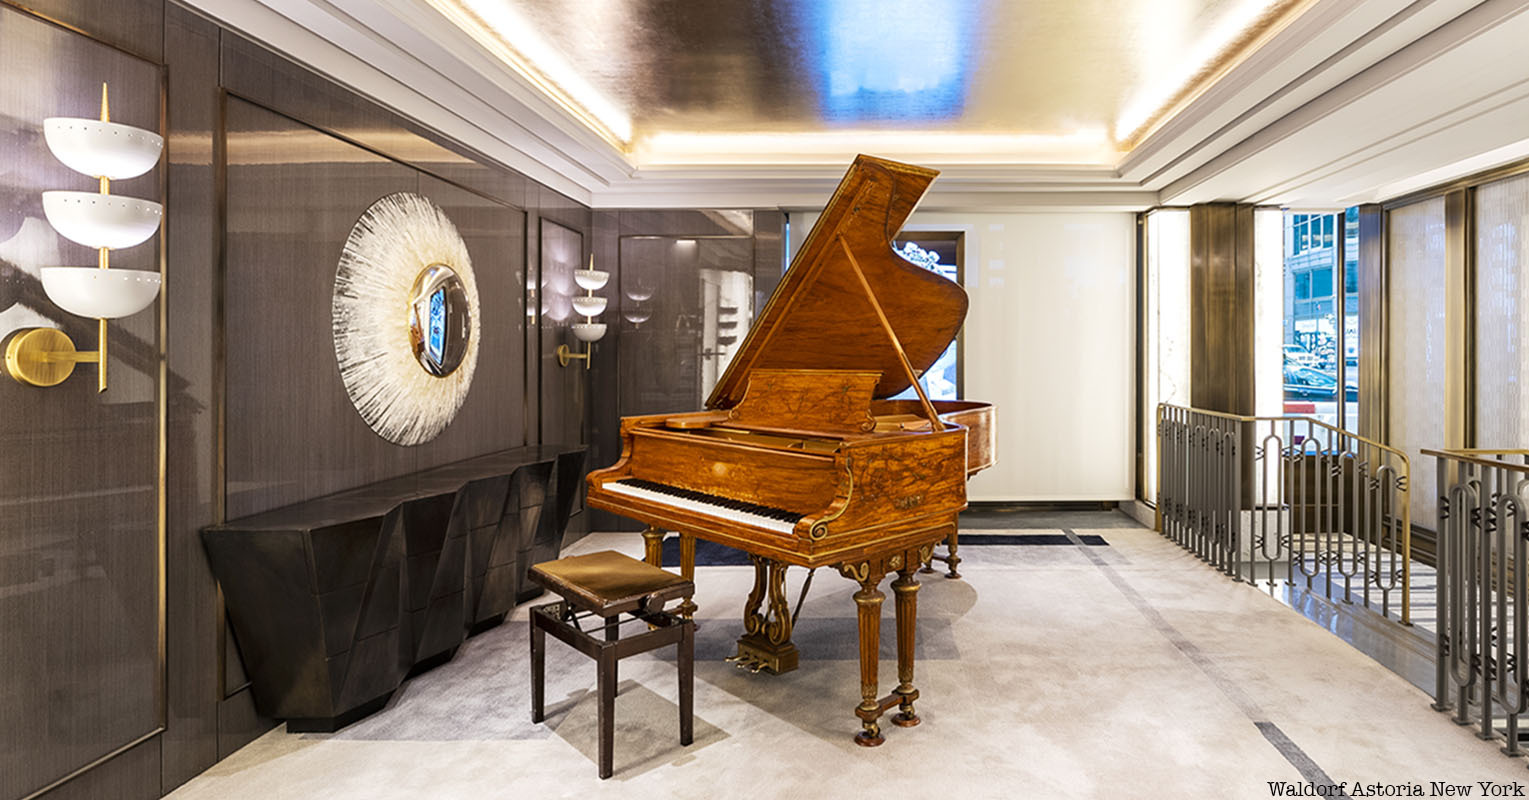 Cole Porter's piano at the Waldorf Astoria